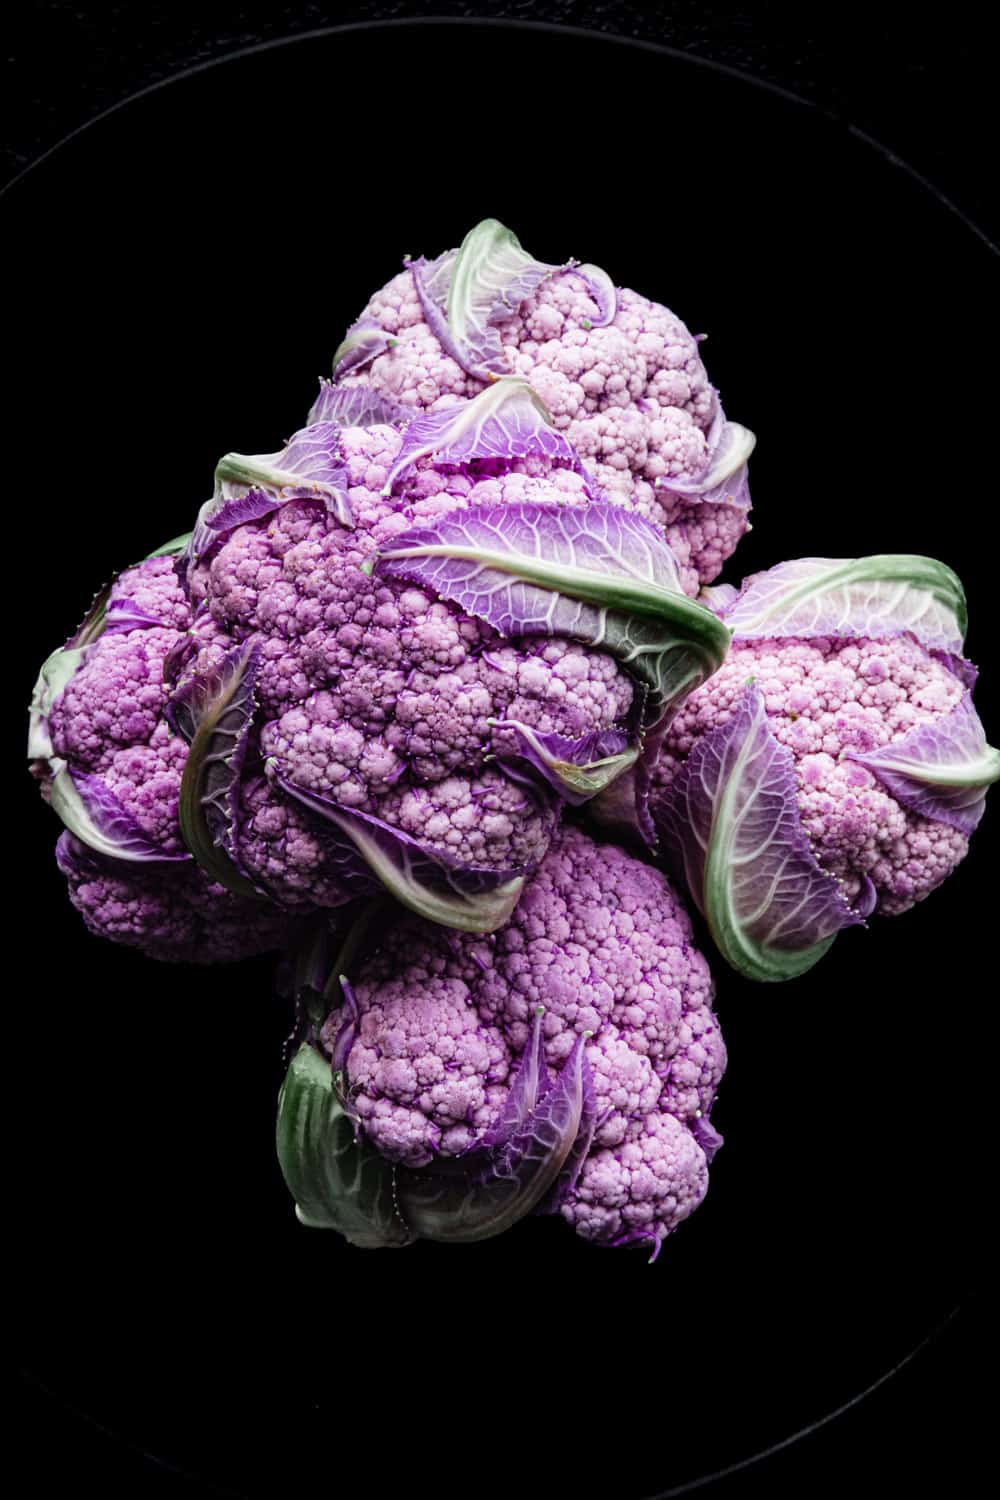 mini heads of purple cauliflower